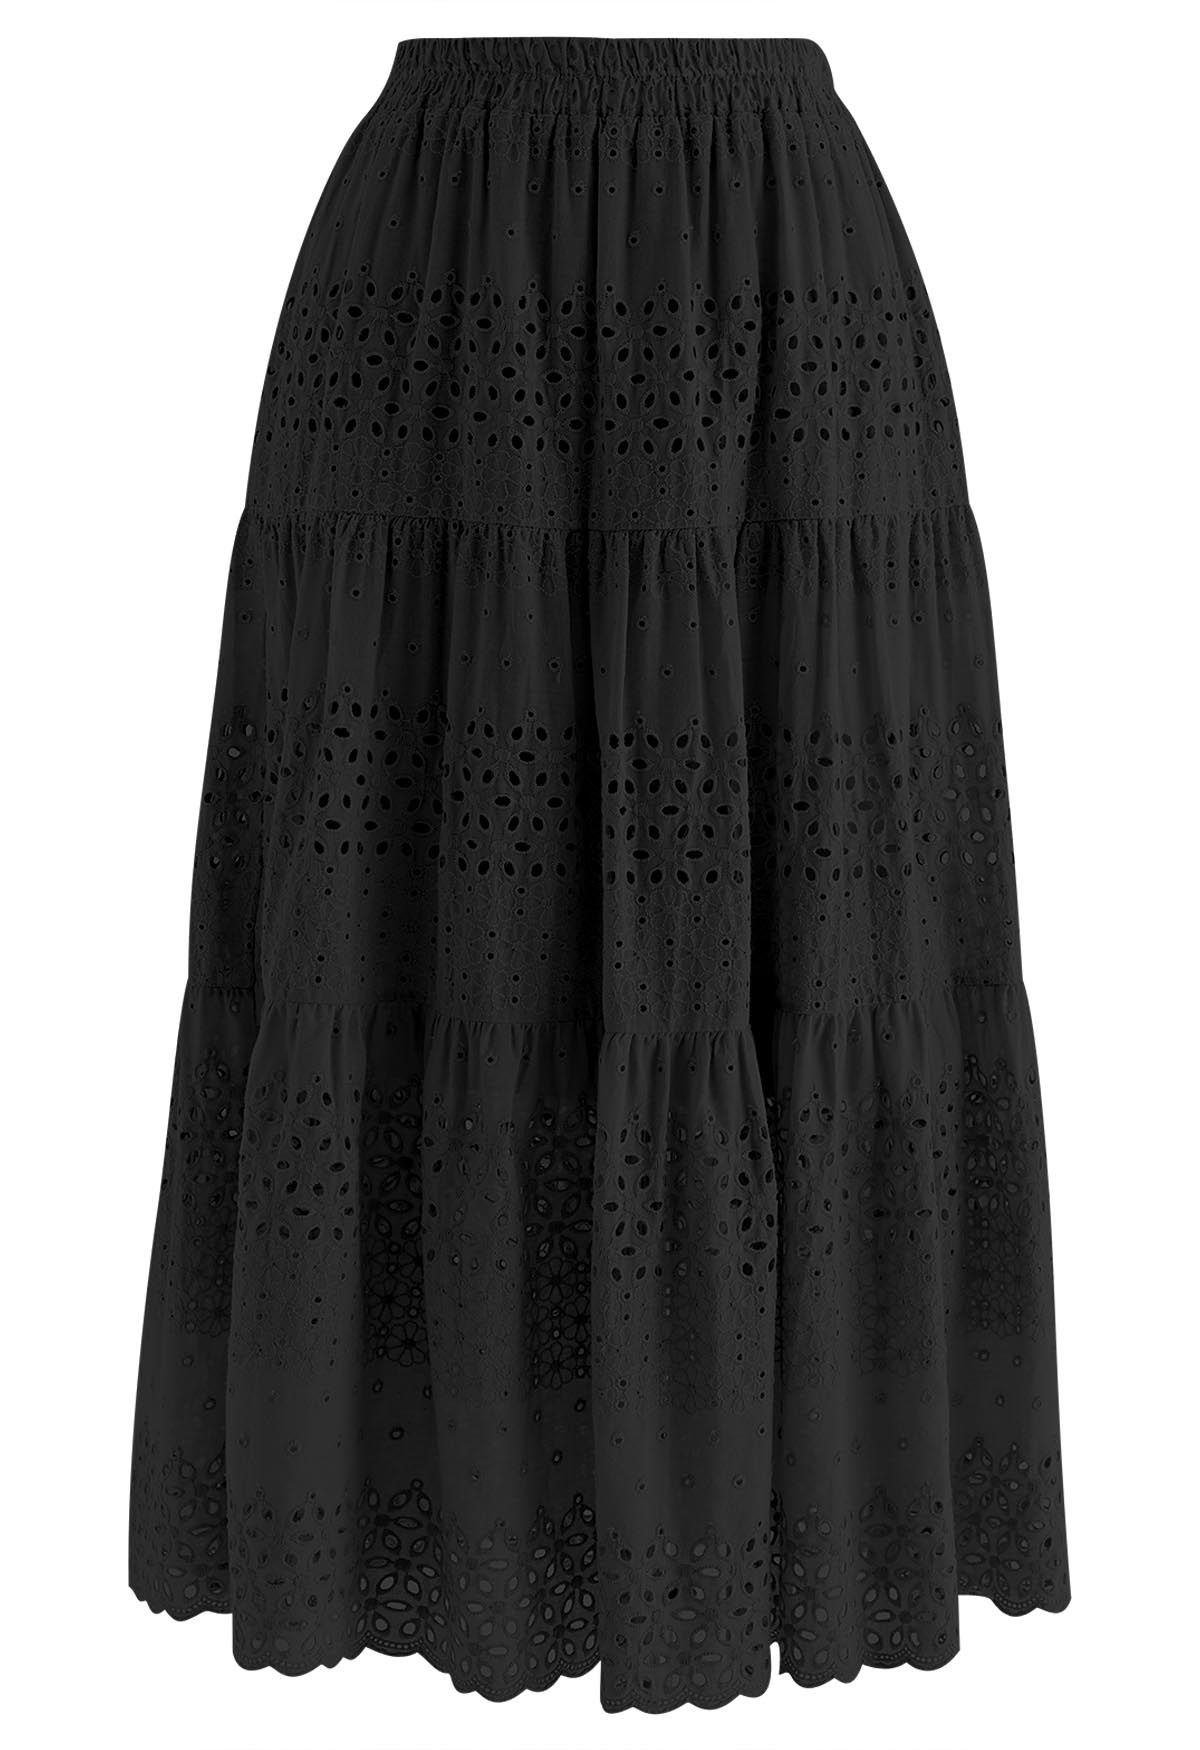 Floret Embroidered Eyelet Cotton Midi Skirt in Black